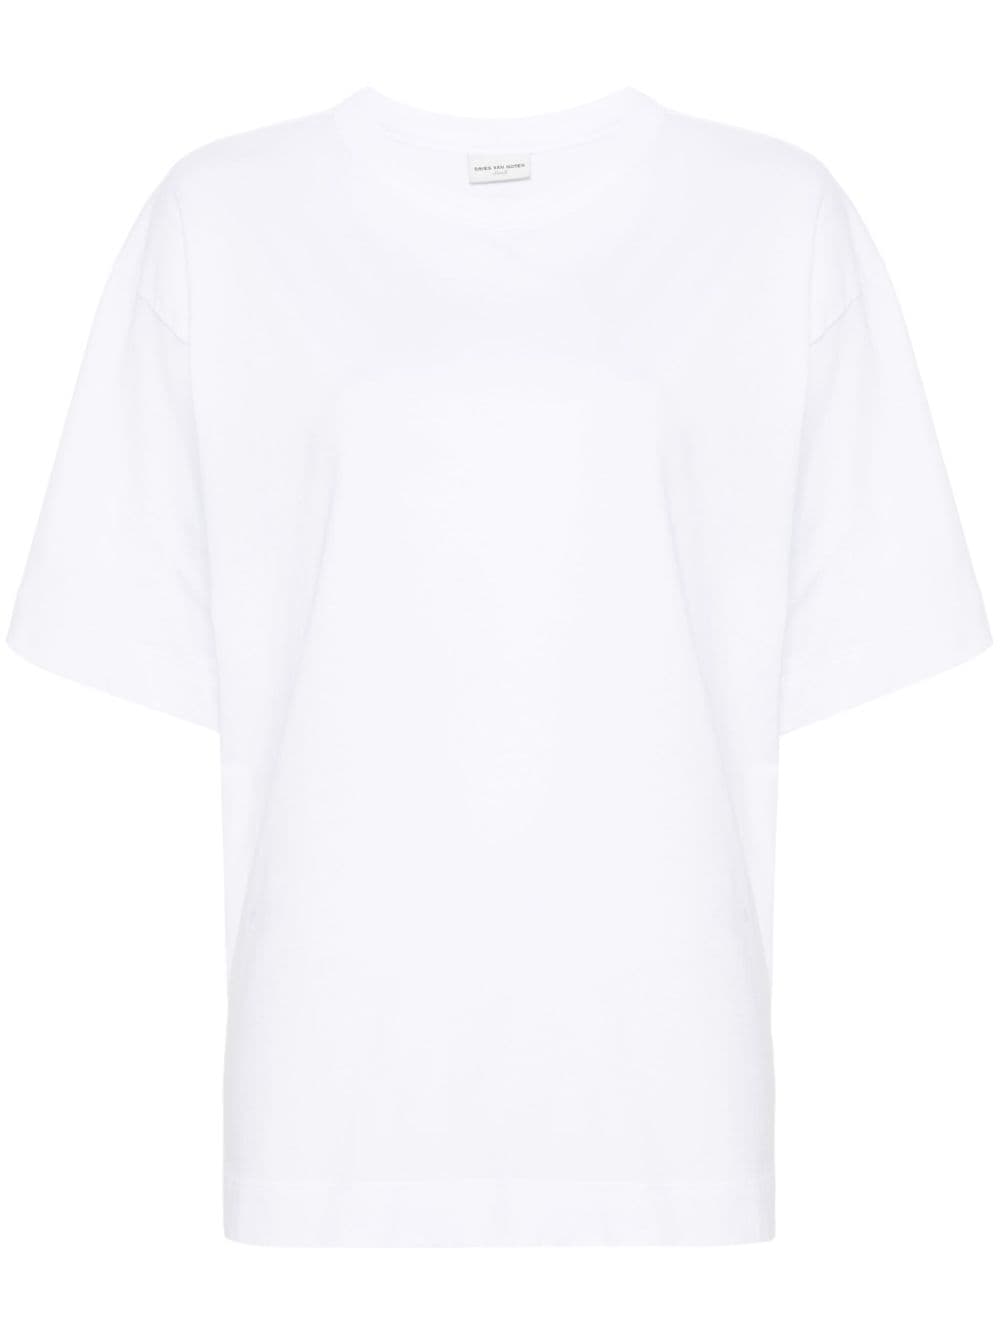 Tontal white t-shirt